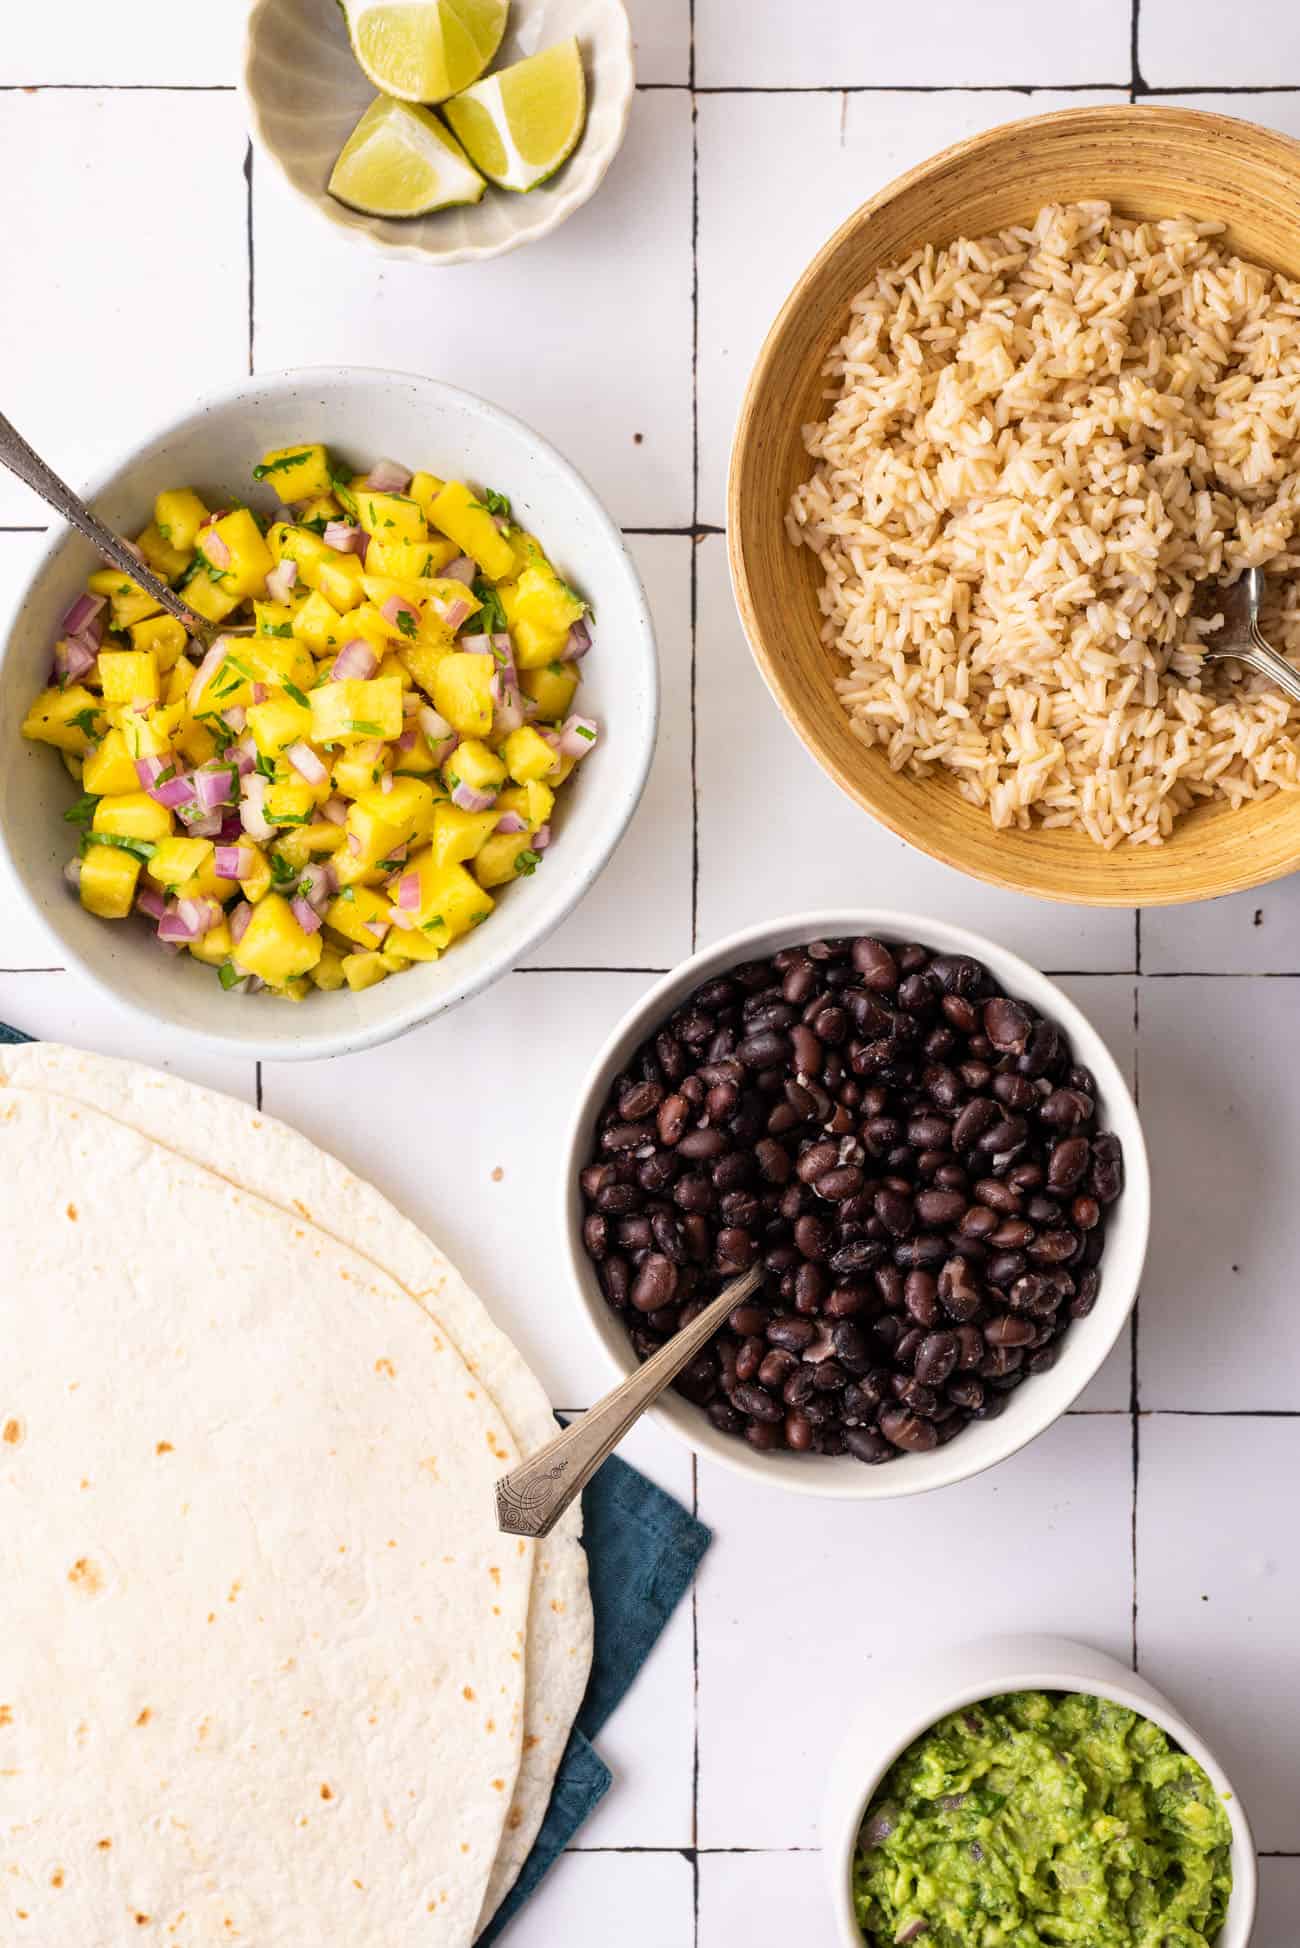 Ingredients to make vegan black bean burritos gathered on a white-tiled table: brown rice, black beans, mango salsa, guacamole